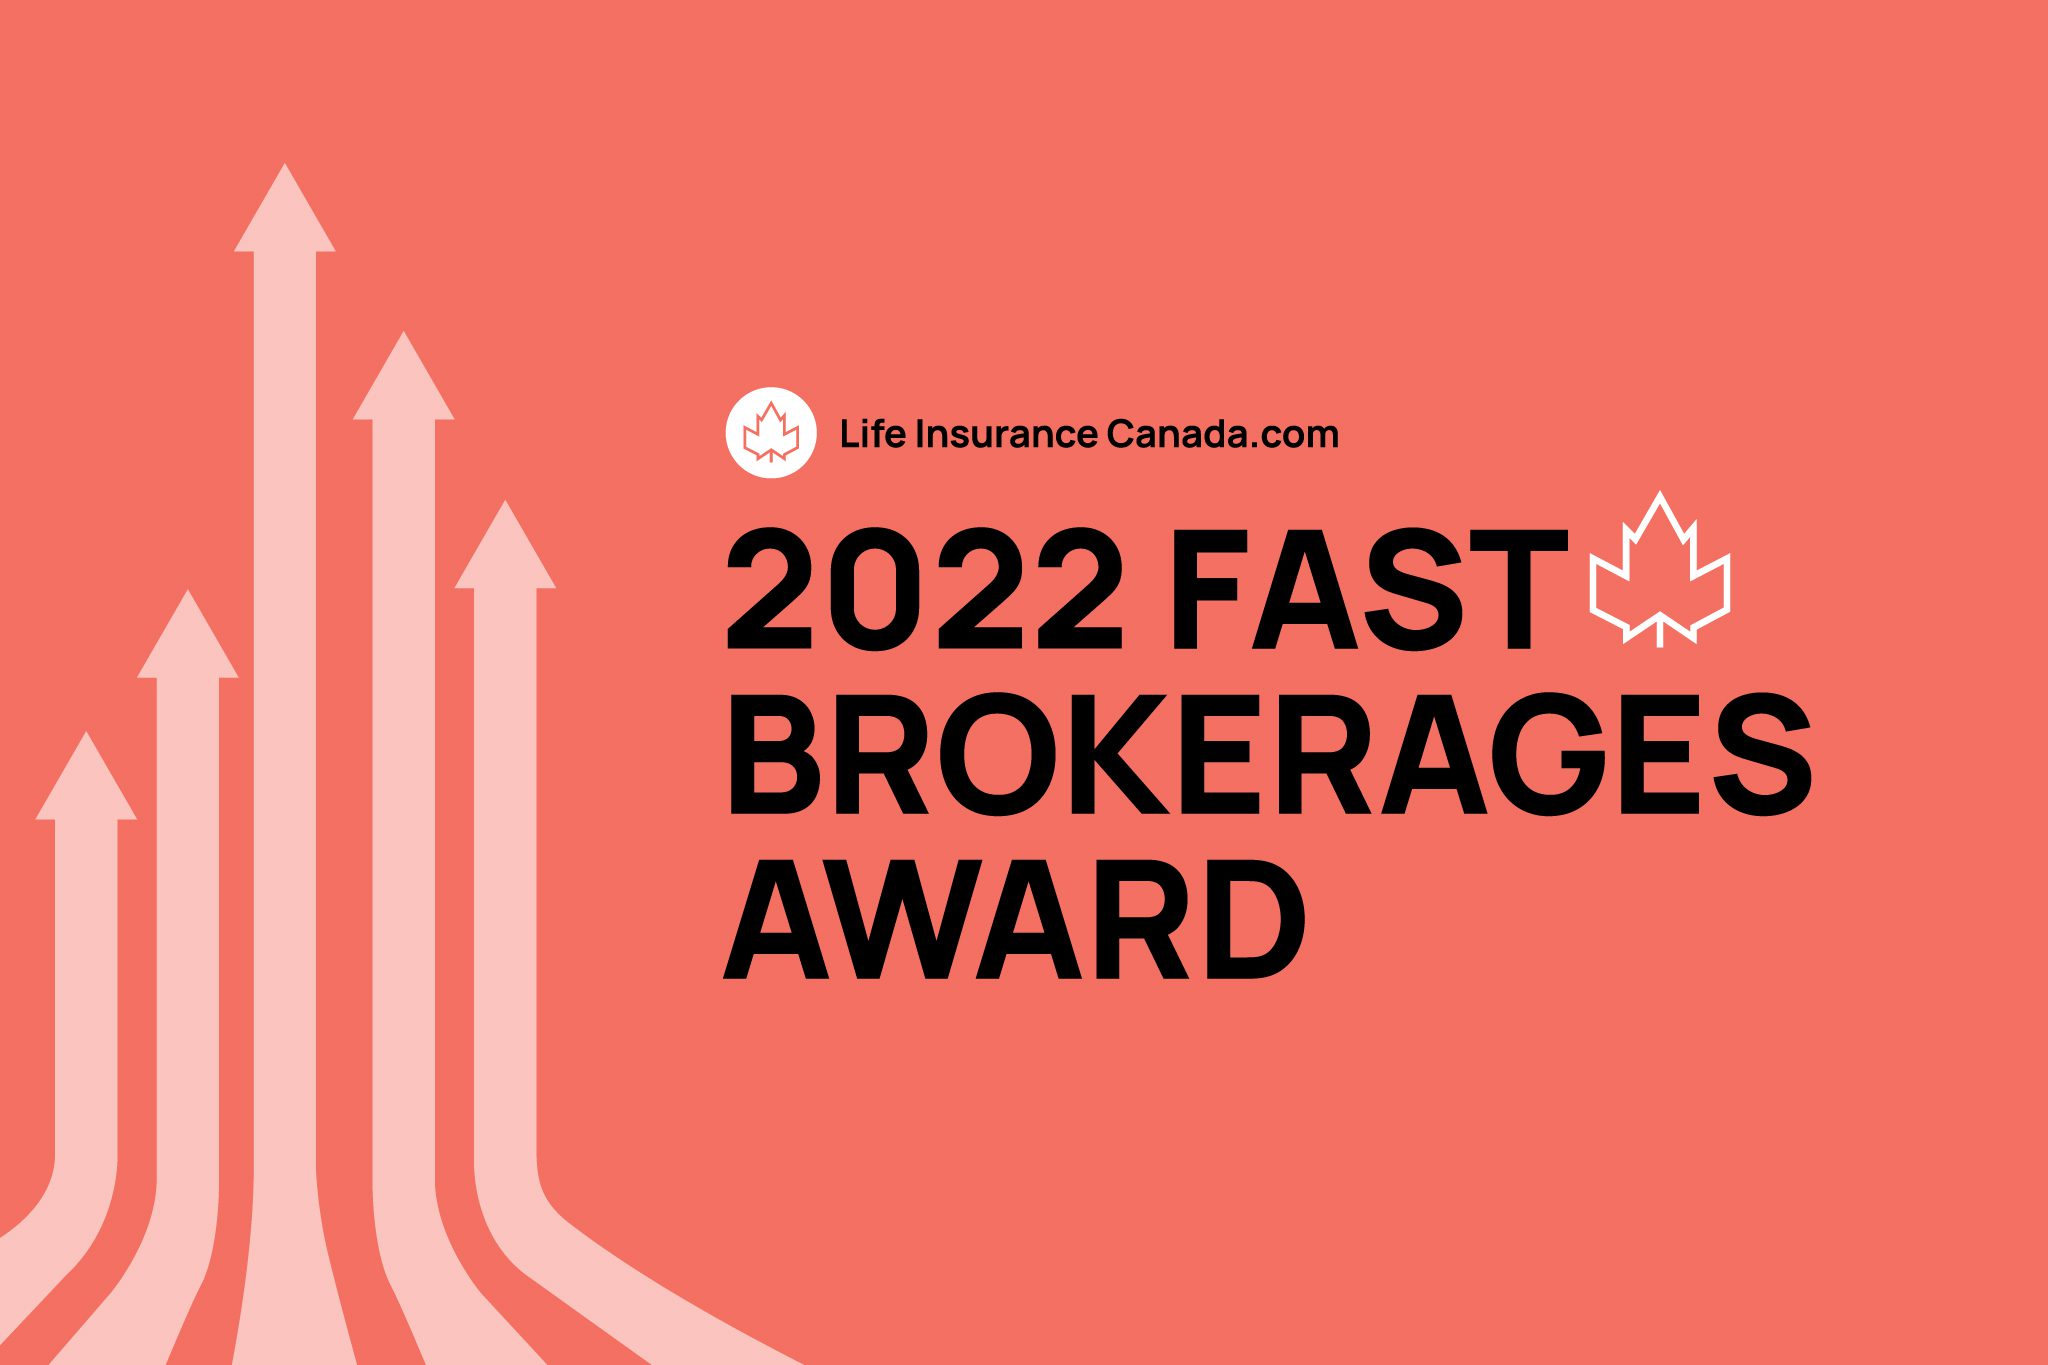 Life Insurance Canada Wins 2022 Fast Brokerages Award